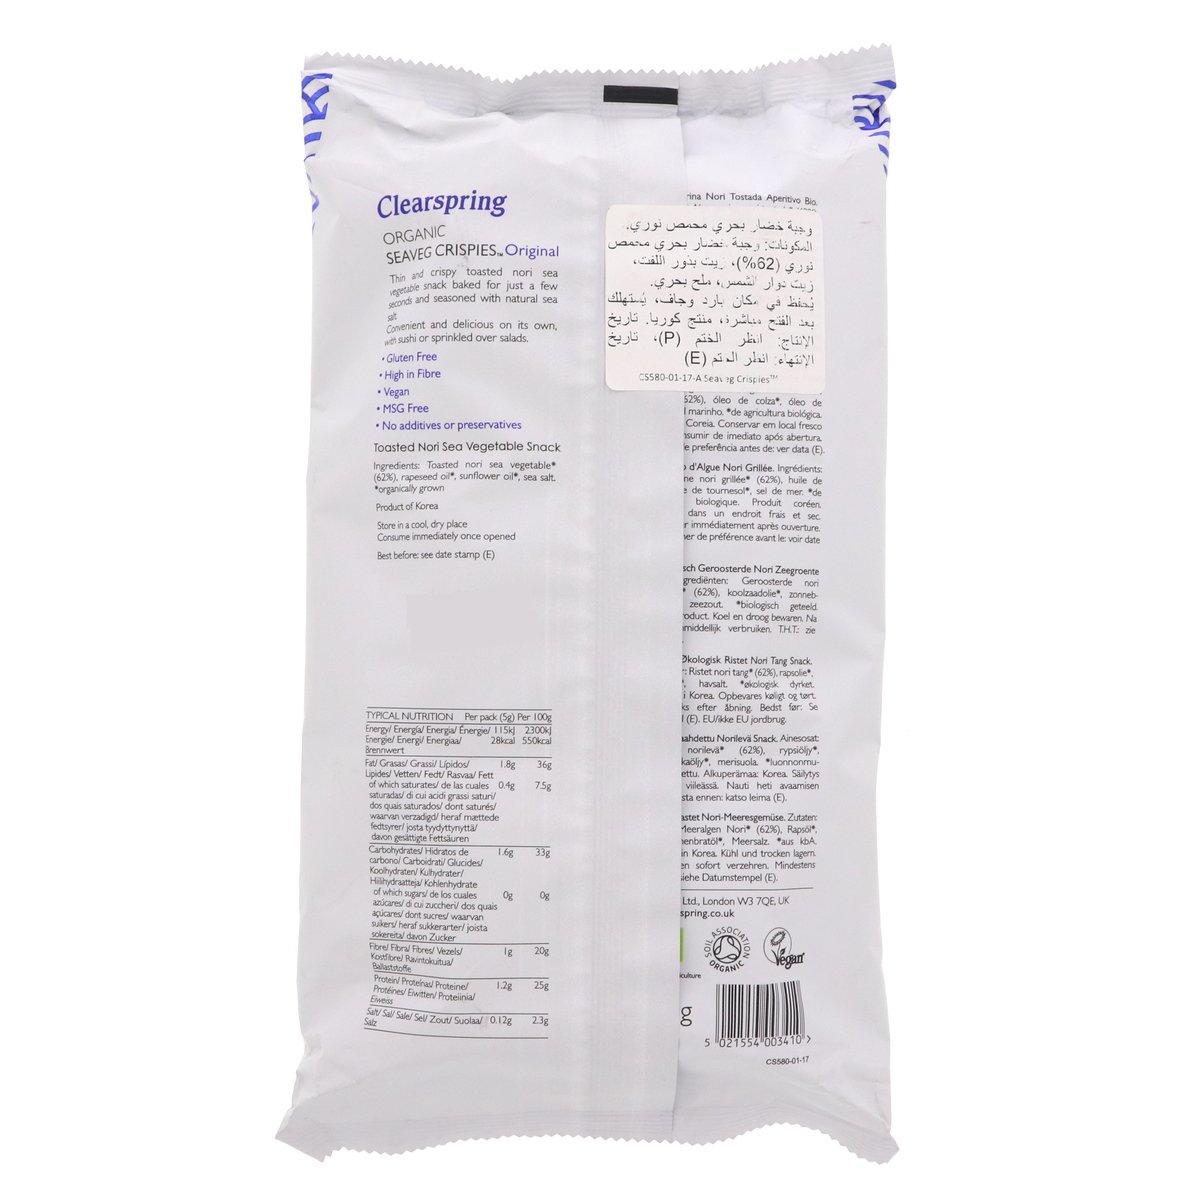 Clearspring Organic Original Seaveg Crispies 15 g